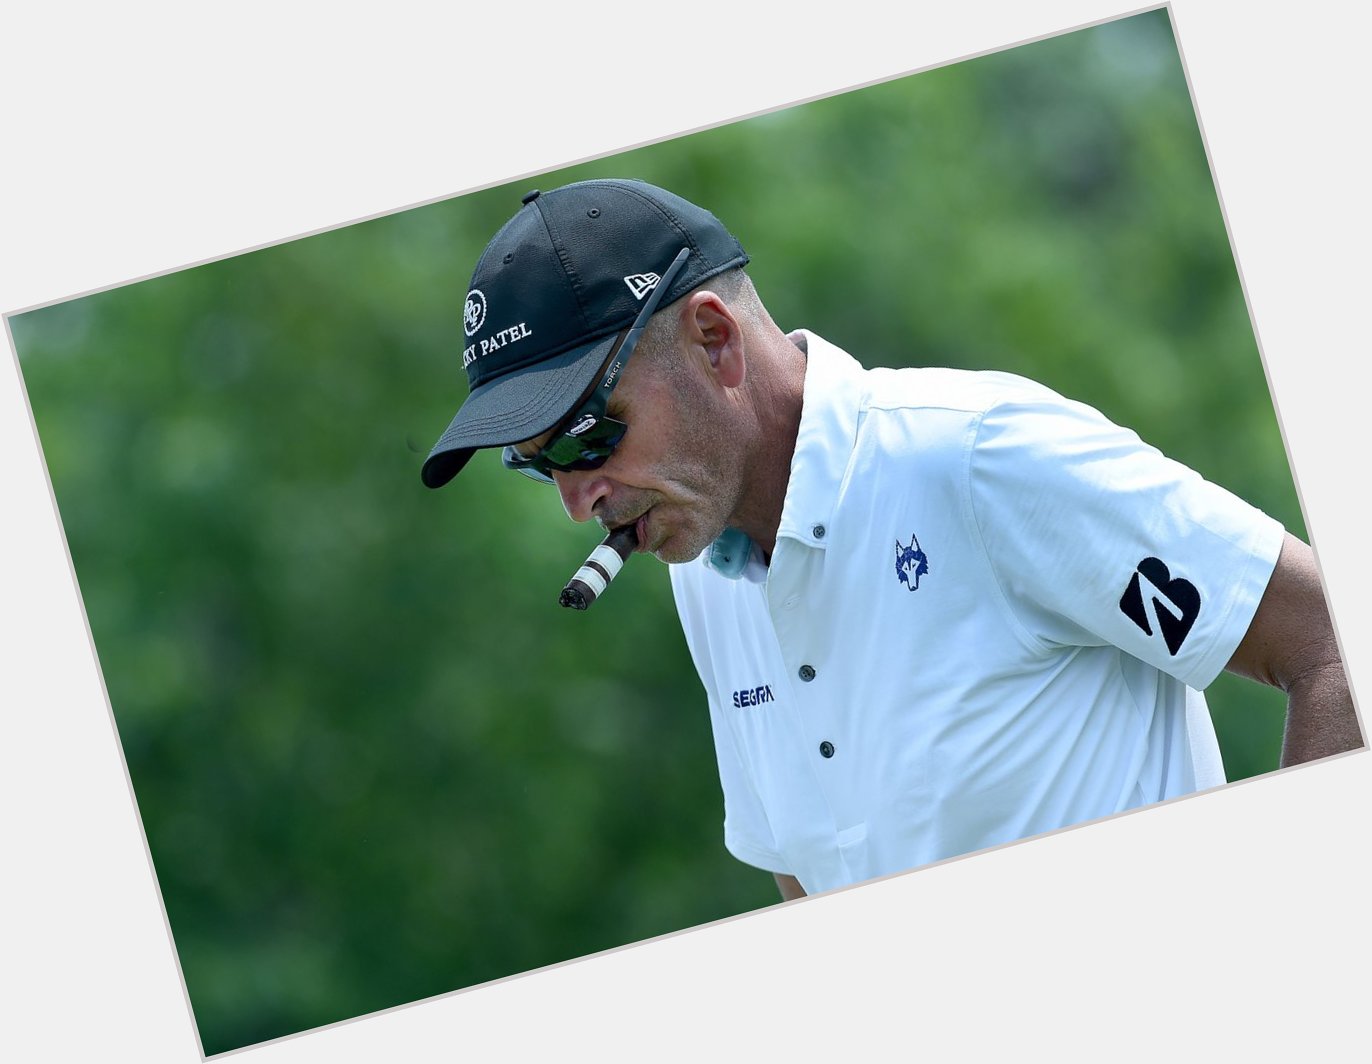  Happy Birthday! - Six-time PGA Tour winner Rocco Mediate celebrates his 58th birthday today! 